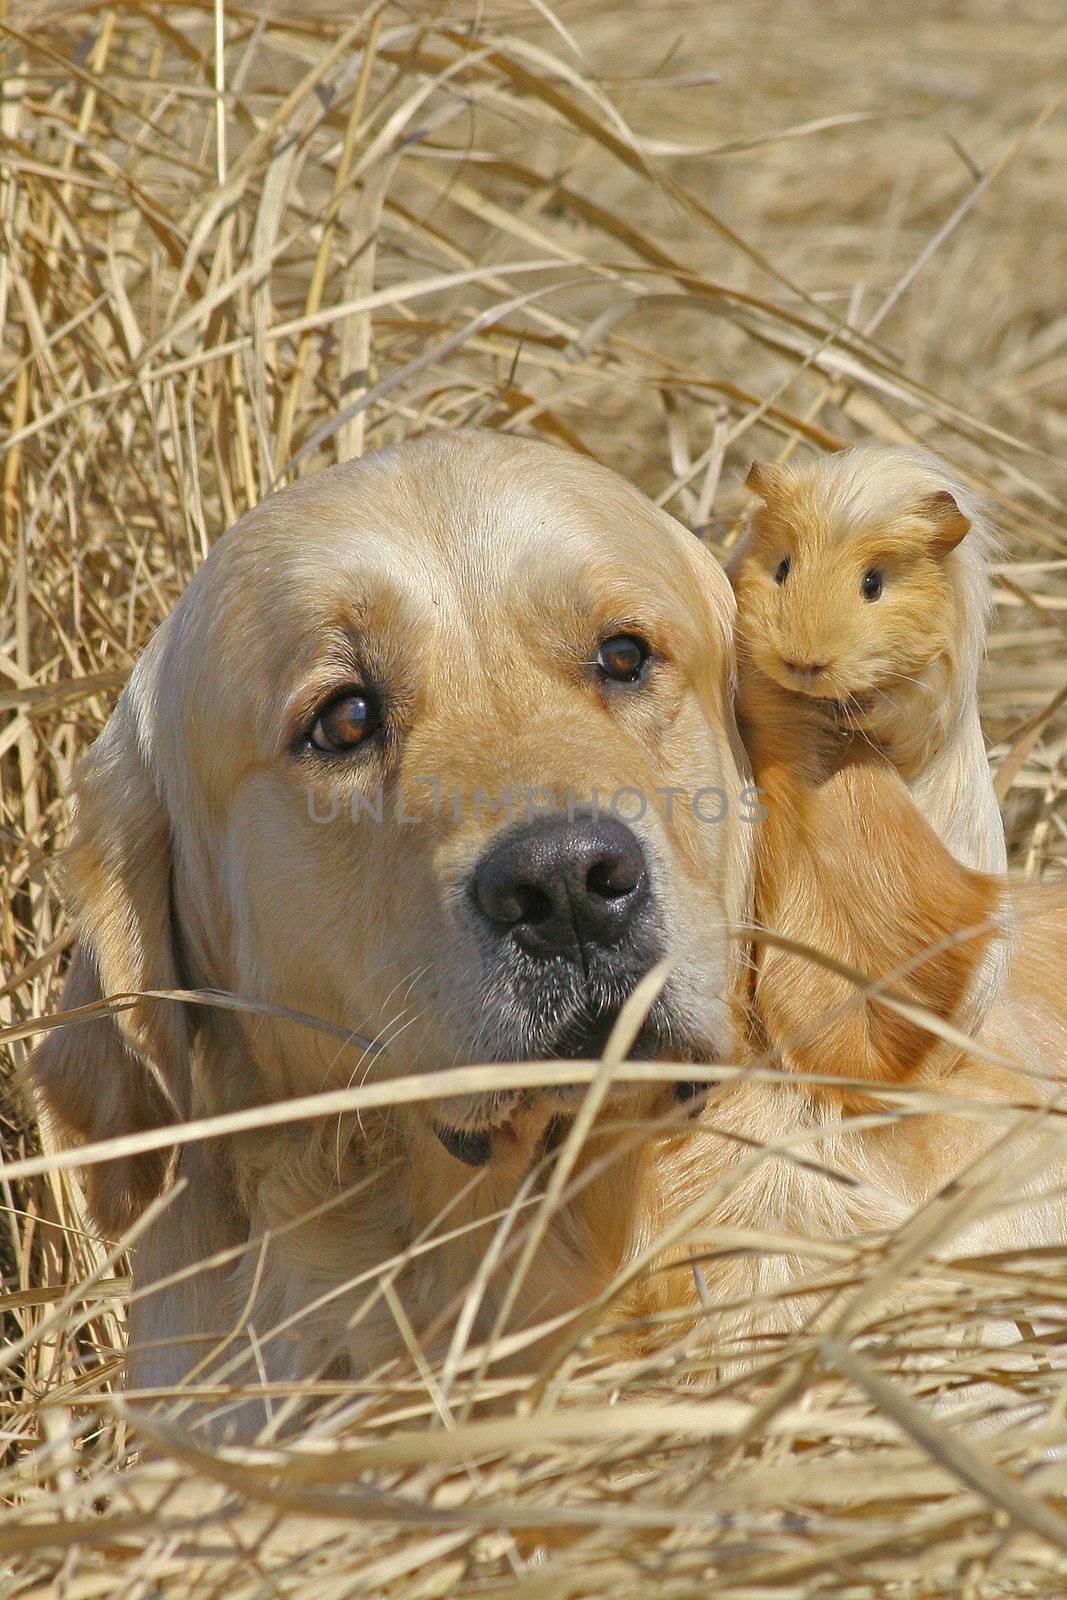 Labrador and Guinea-pig sitting together